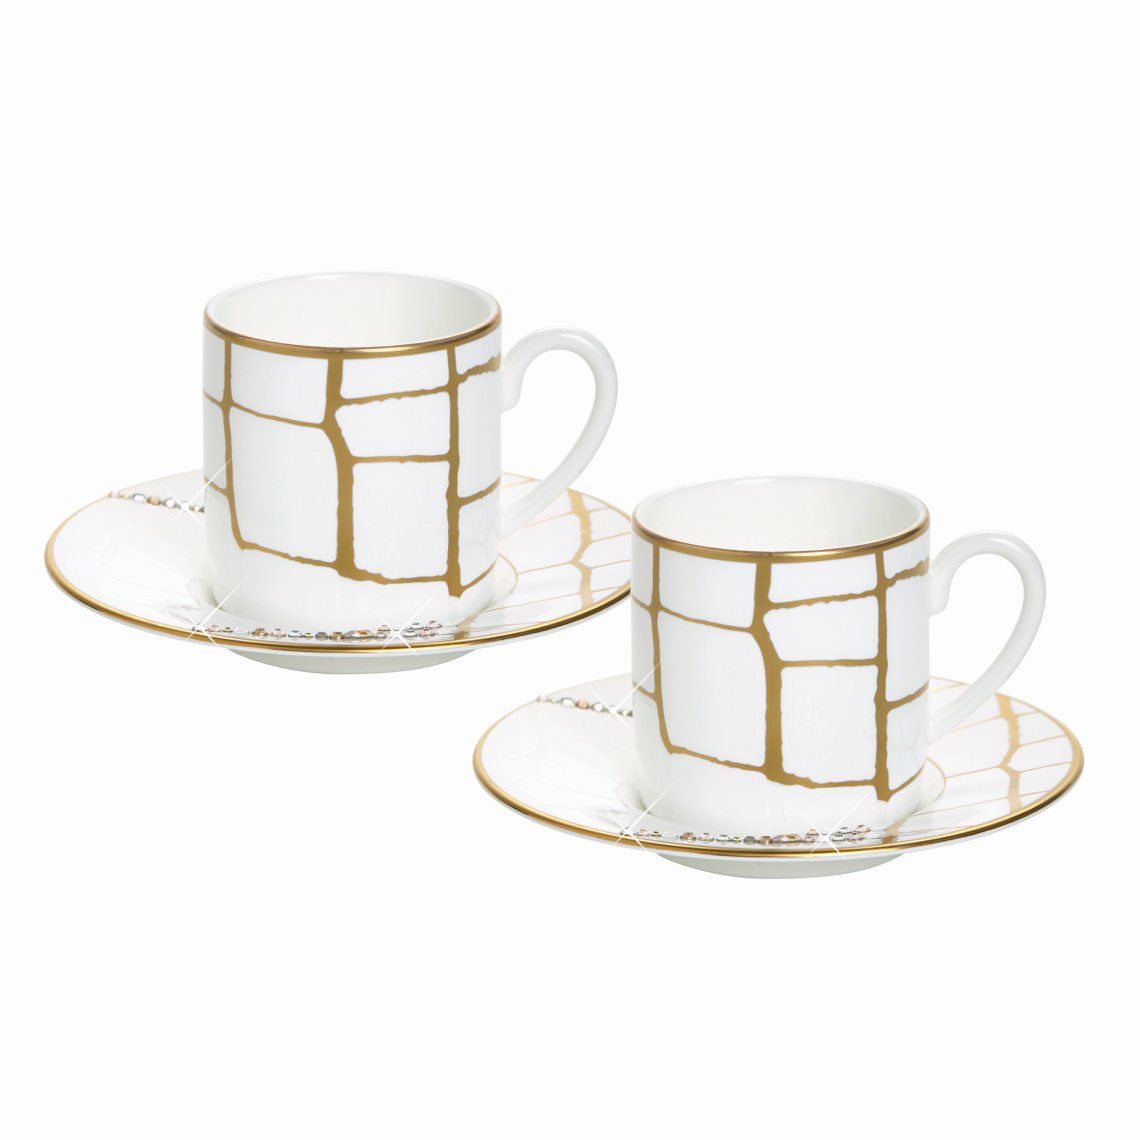 Set of 2 Alligator gold espresso cup and saucer 